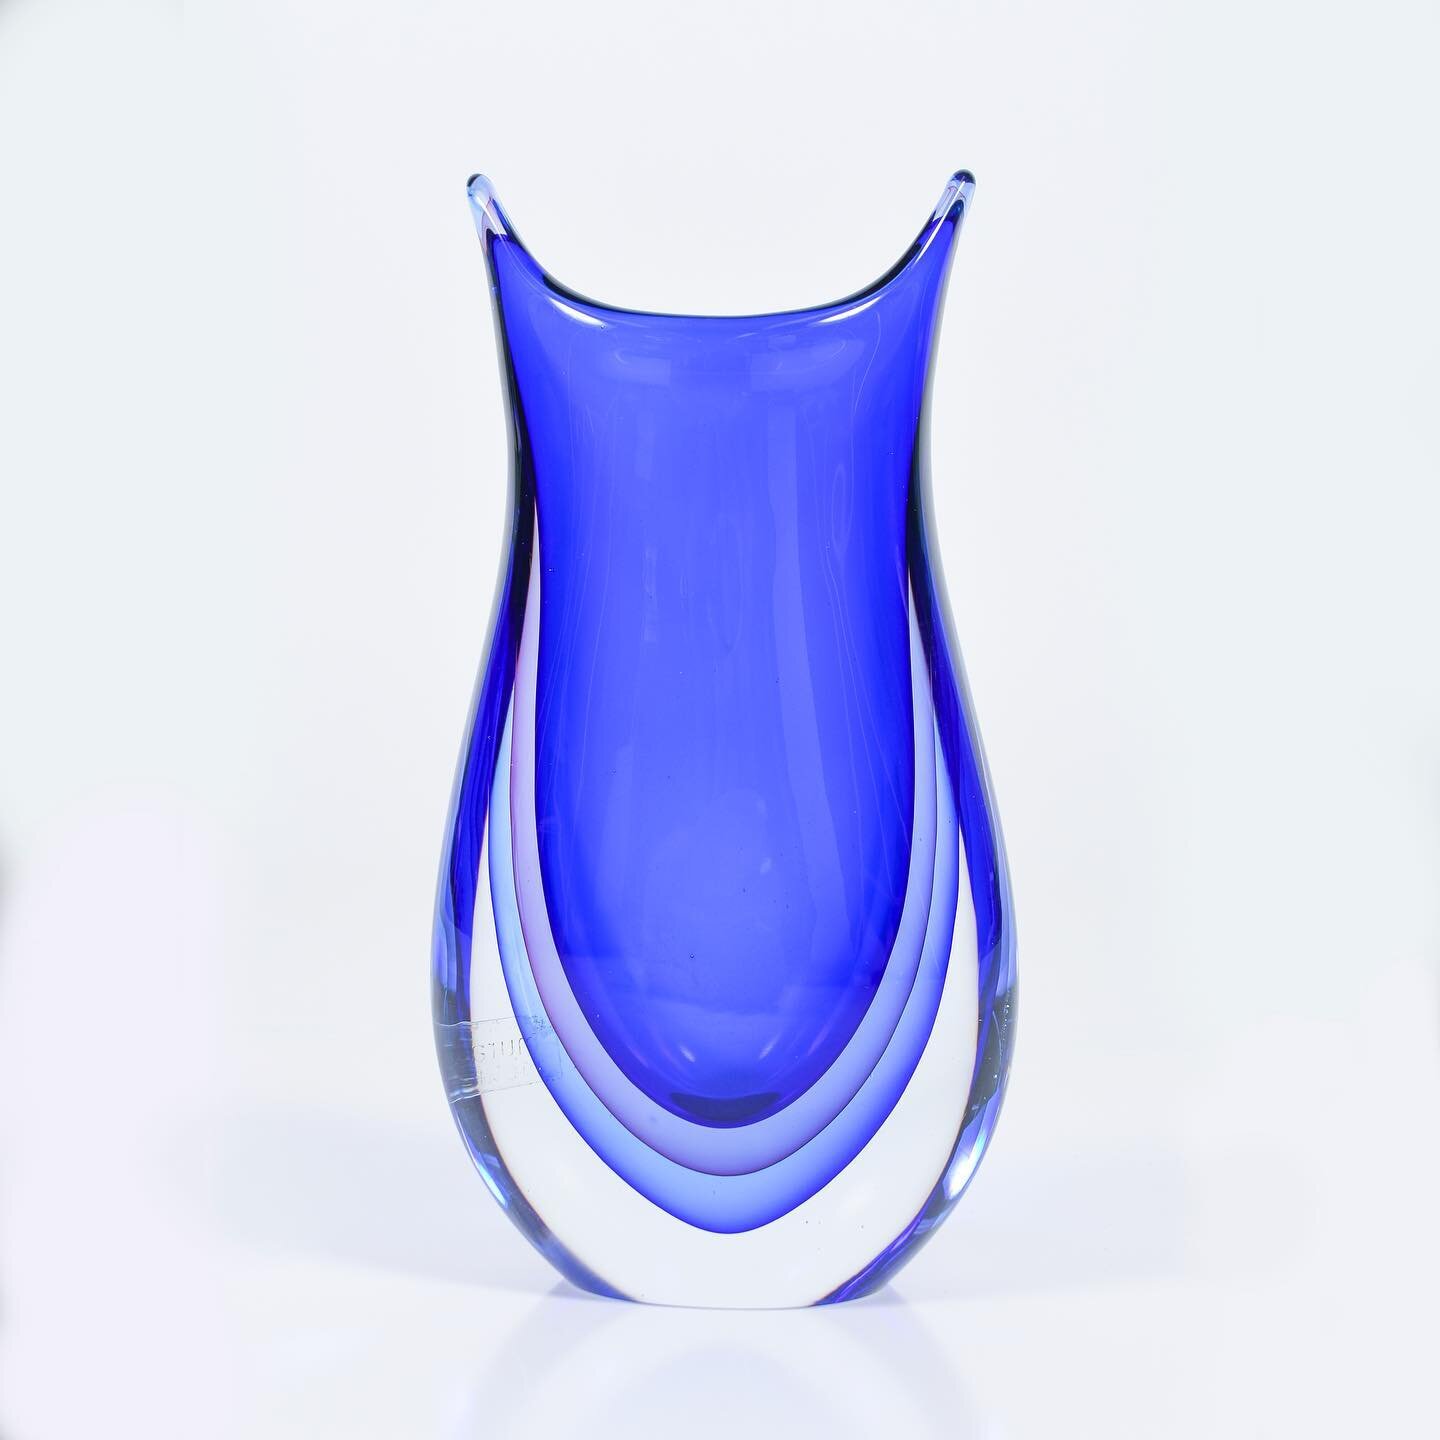 Murano blue glass vase.

Photo: @tryst.red 
.
.
.
.
.
.
.
#art #design #designer #glassvase #murano #muranovase #blockauctionhouse #auctionhouse #auction #muranoglass  #glassart #ferndale #birmingham #royaloak #detroit #michigan